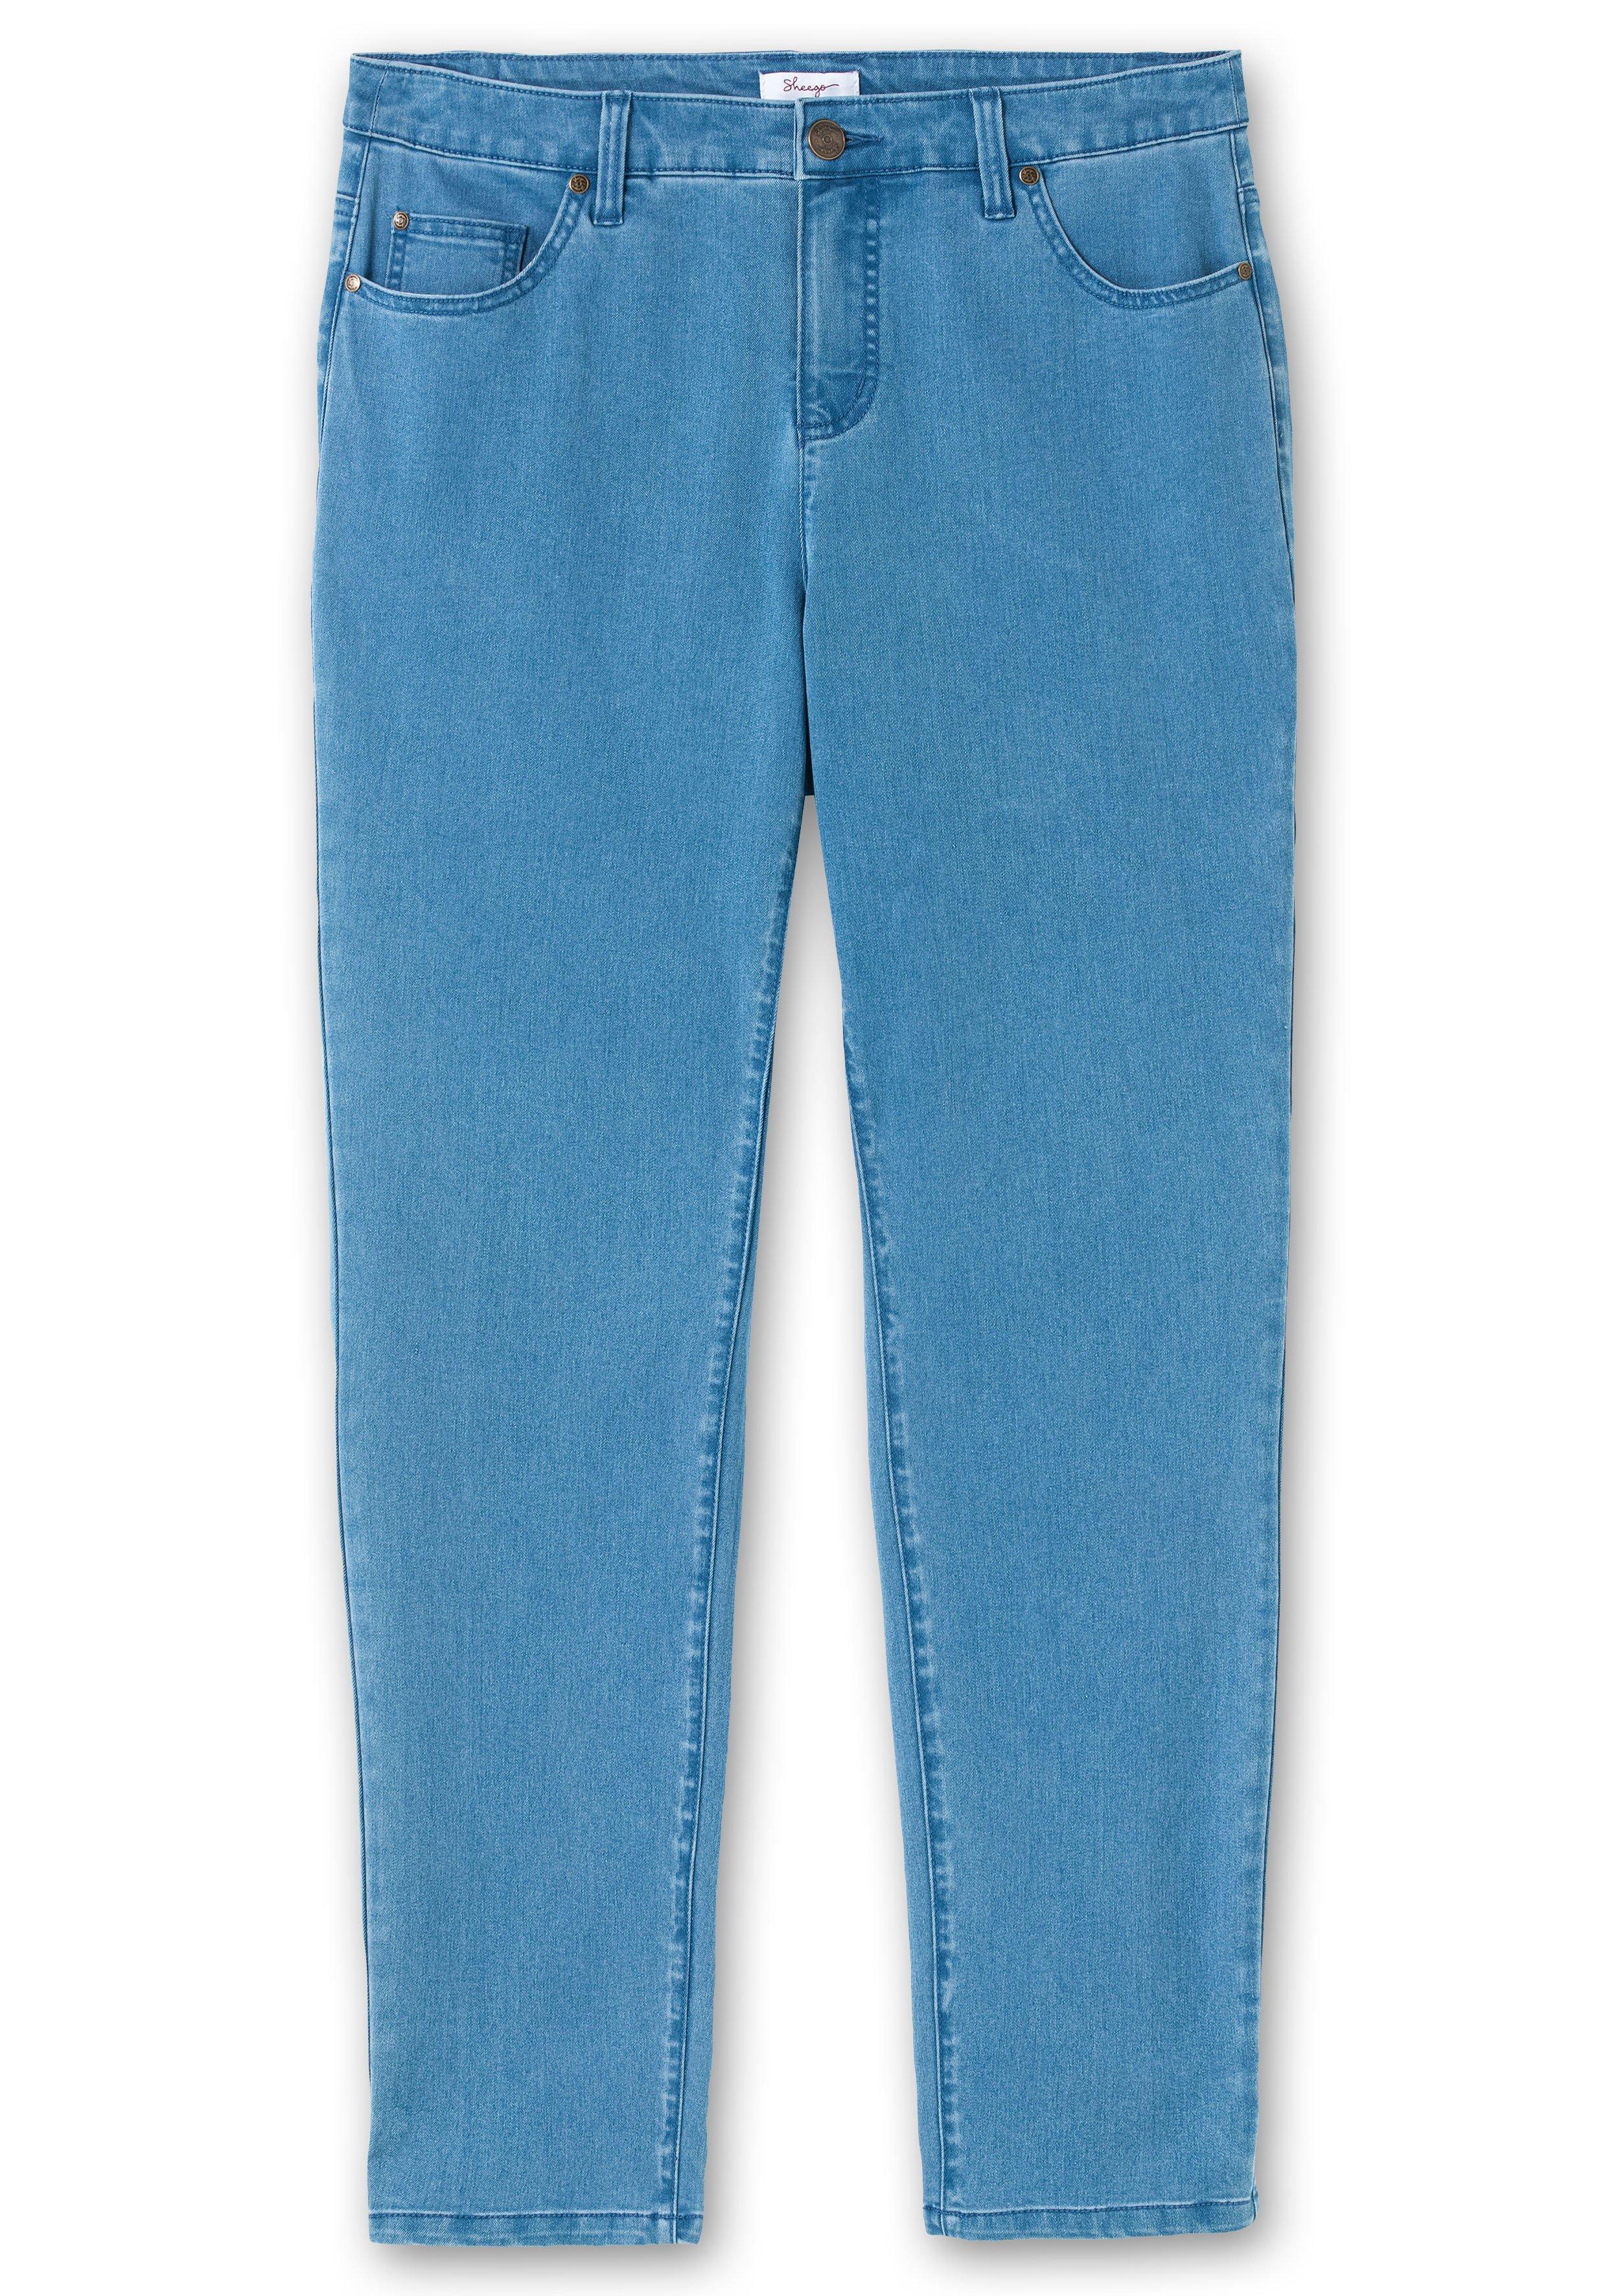 Schmale Stretch-Jeans | black 5-Pocket-Stil - Denim im sheego blue